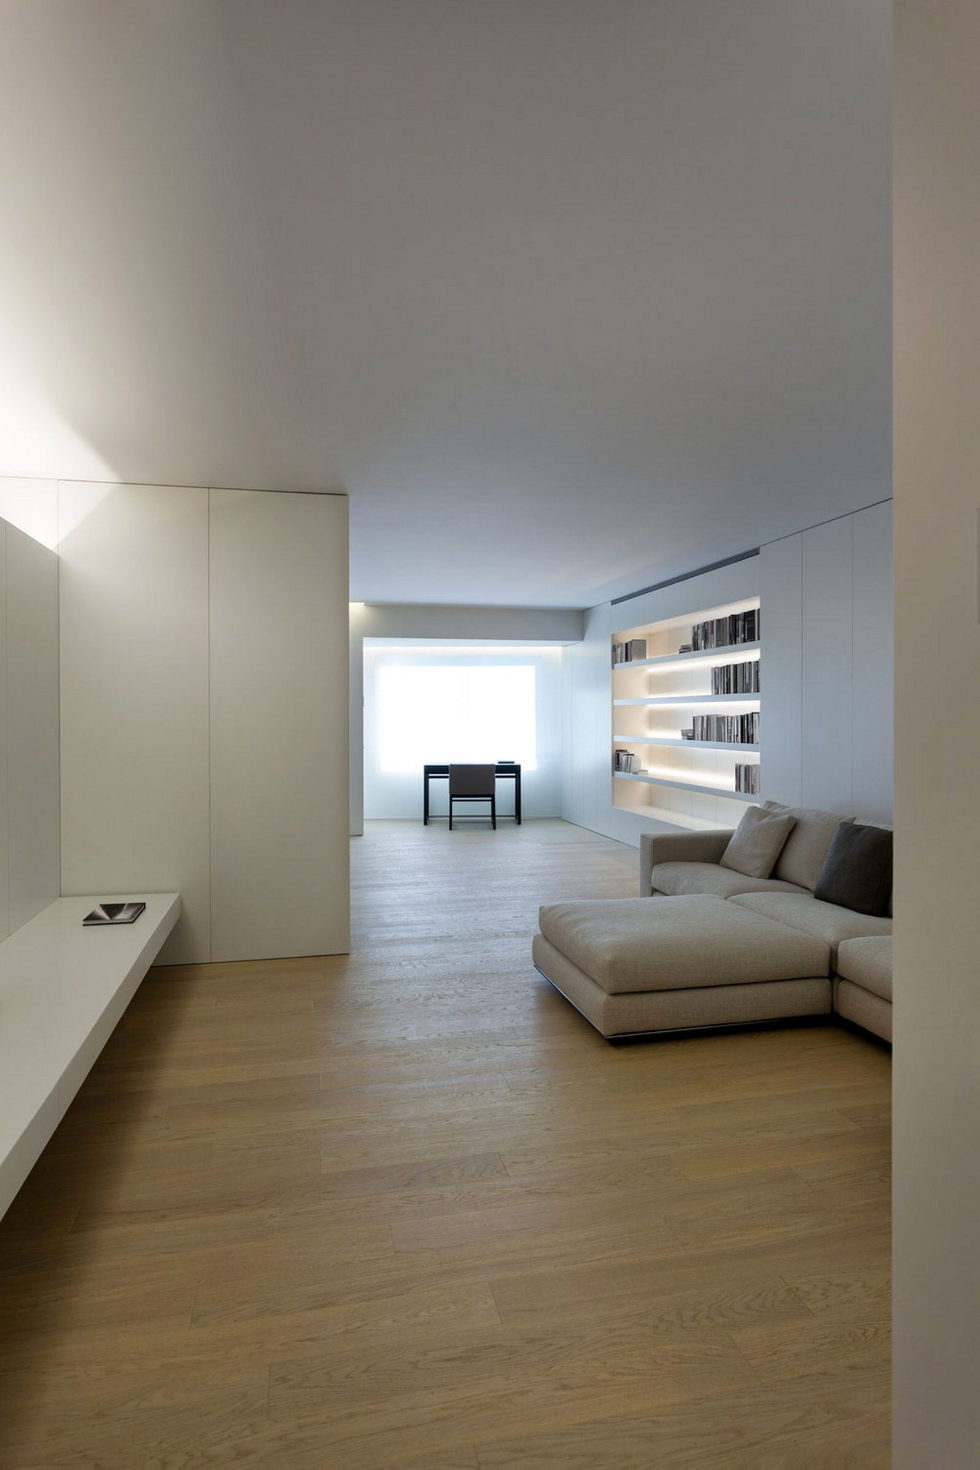 Contemporarily Designed Apartment In Valencia by Fran Silvestre Arquitectos 7